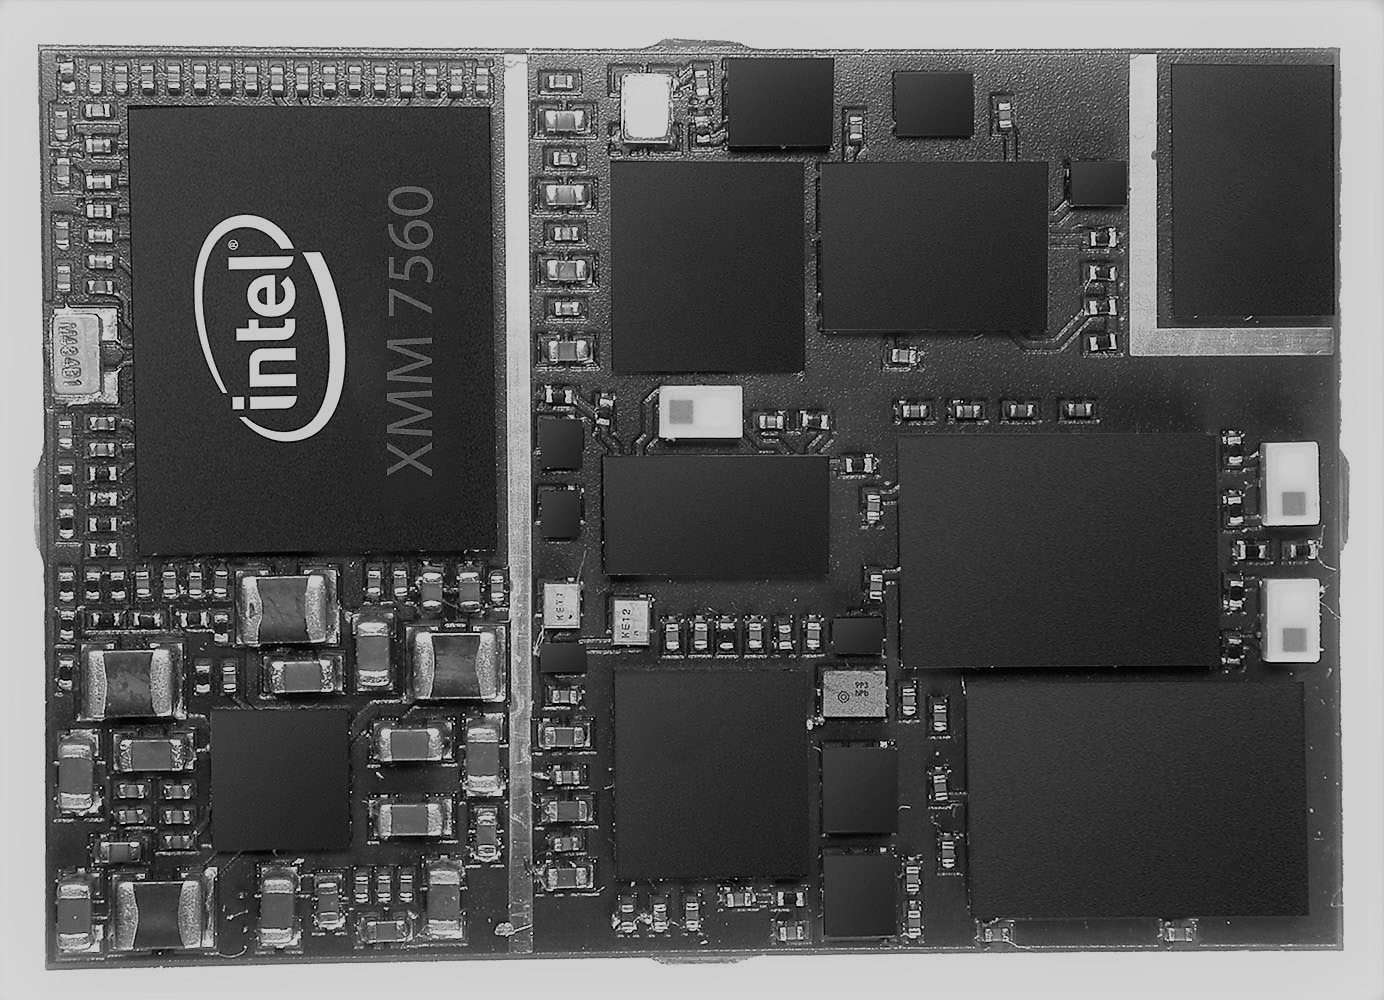 Intel XMM 7560 Modem